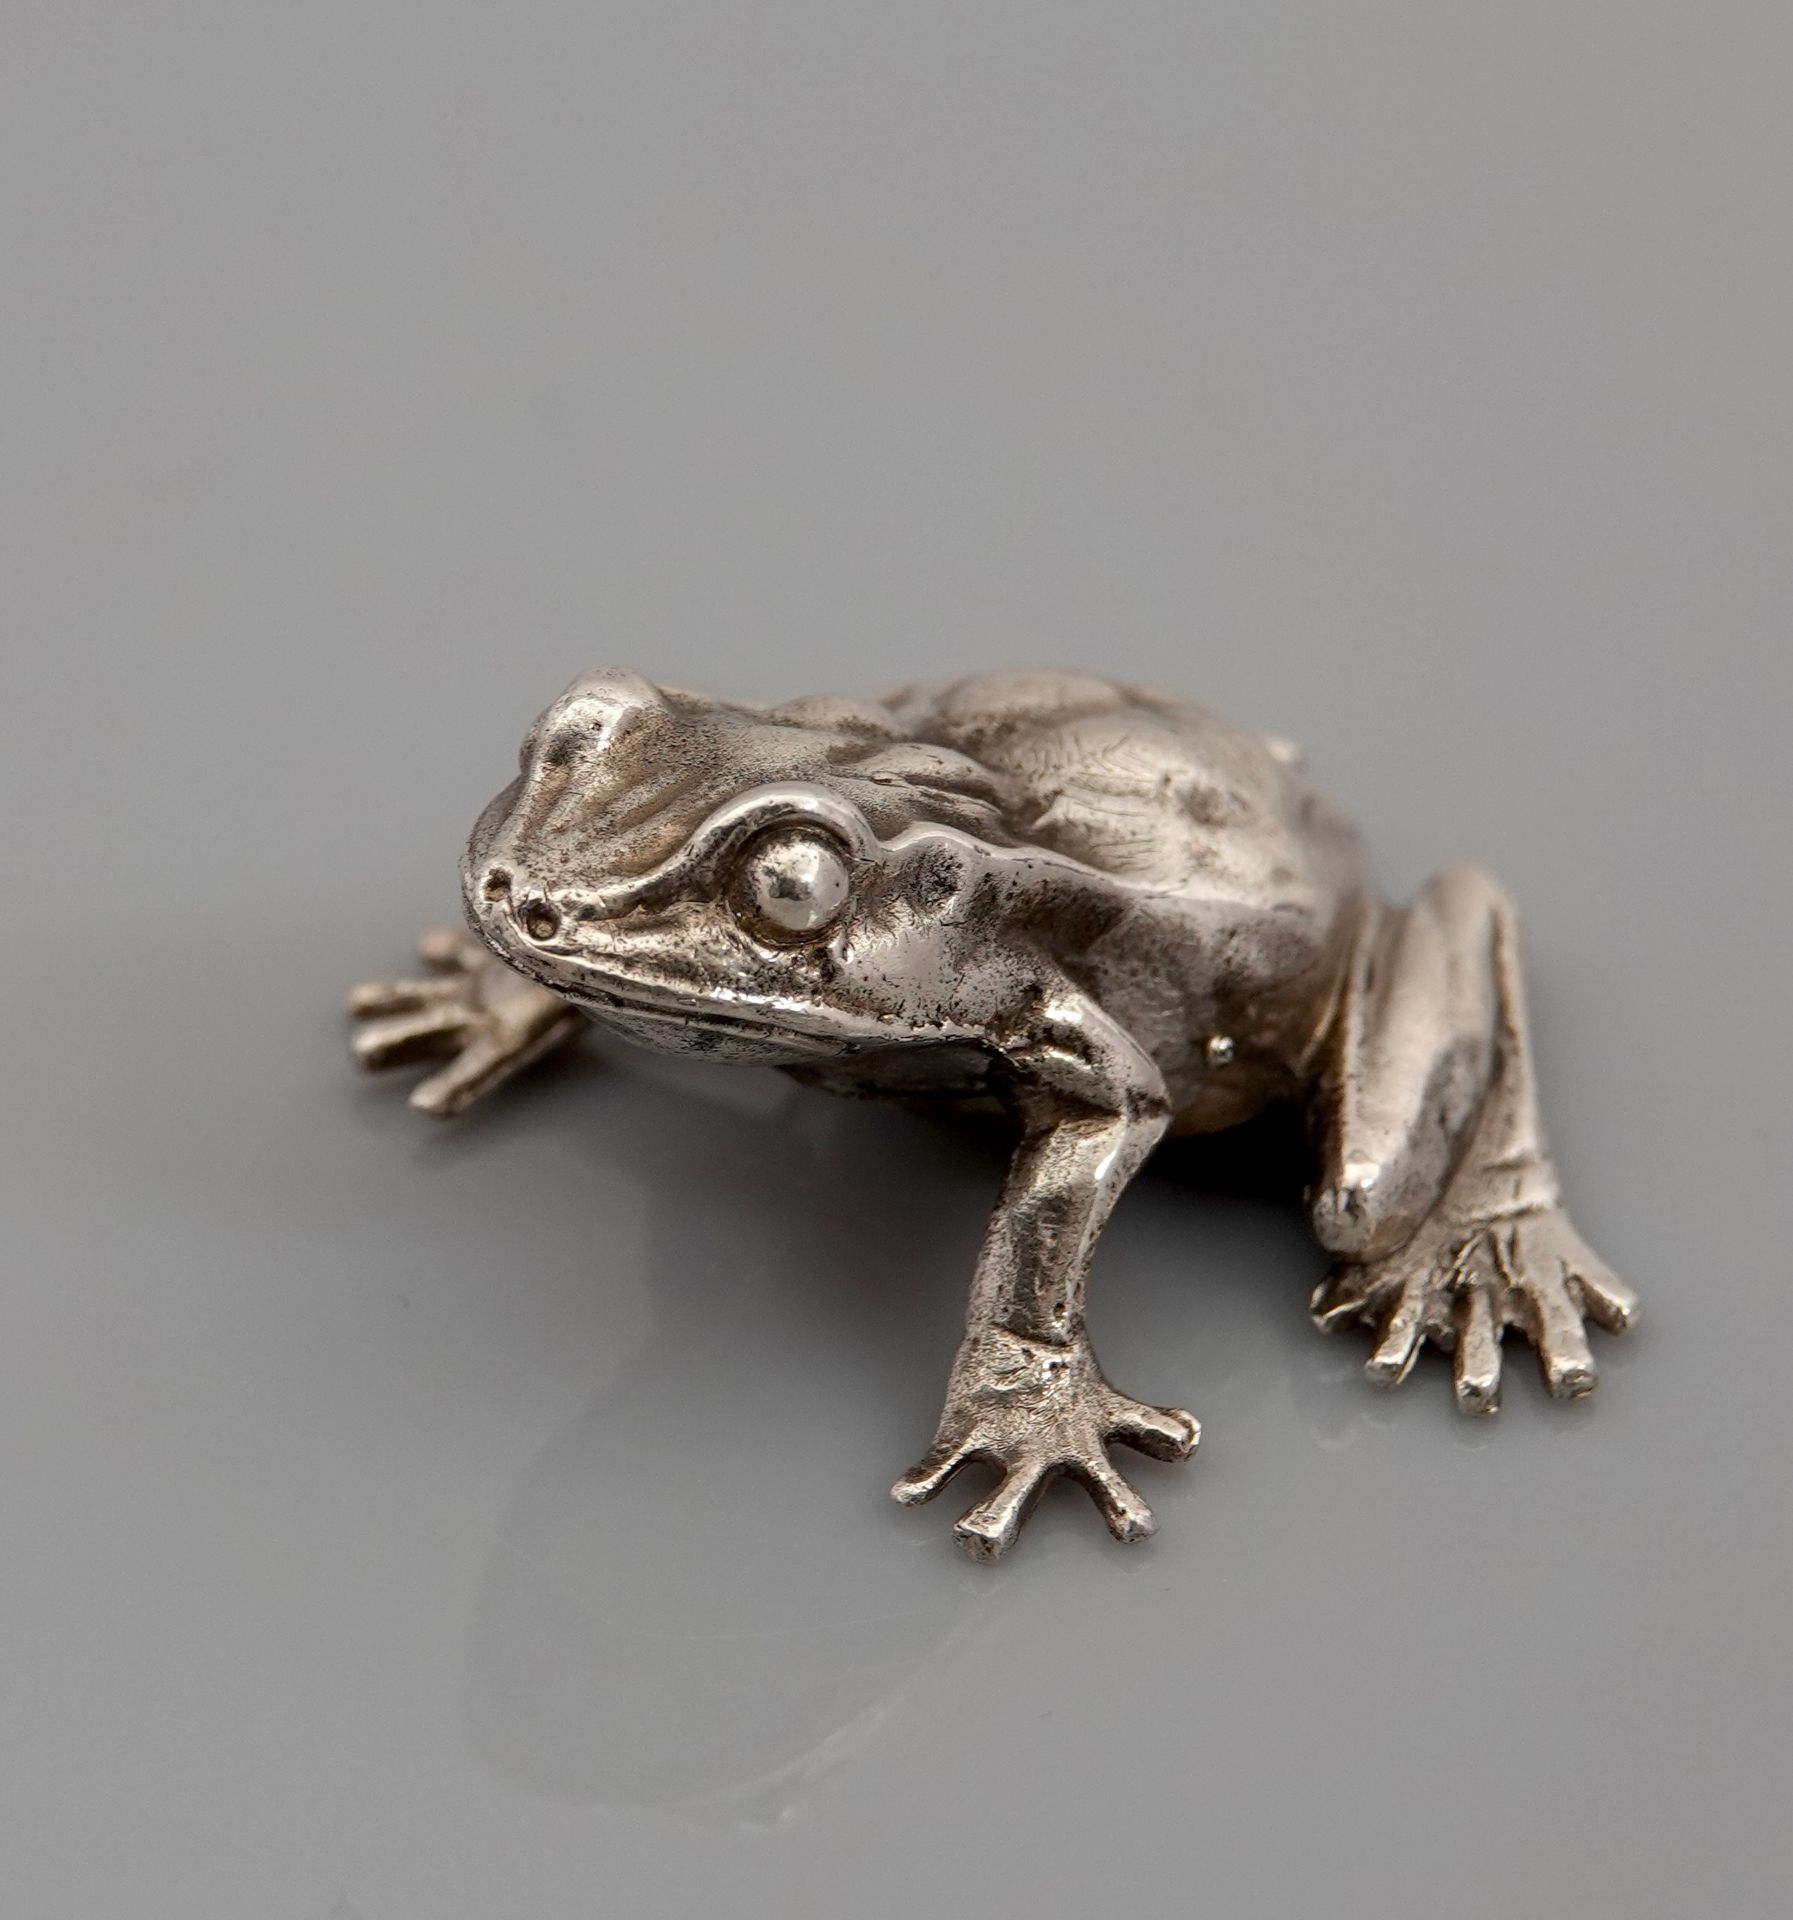 Null Frog, silver 925 MM, size 4 x 5 cm, Minerve hallmark, weight: 80gr. Gross.